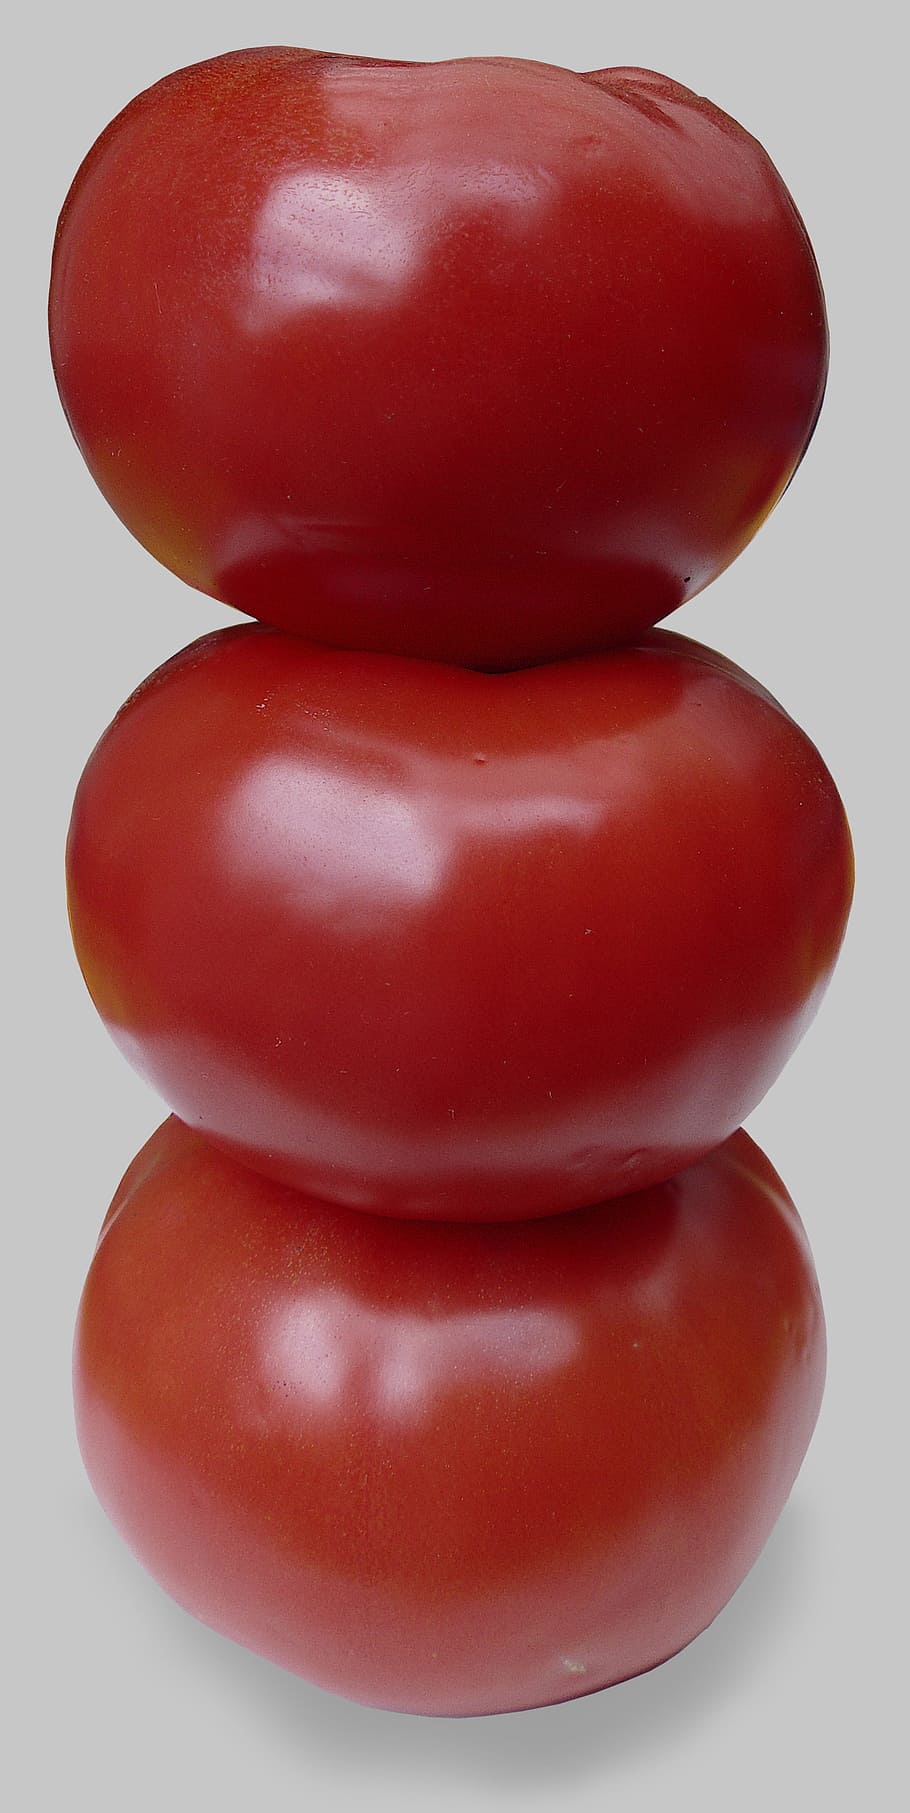 tomate, filete de ternera, apilado, crecido, solanum lycopersicum, xitomatl, nachtschattengewächs, rojo, vegetales, paradeisapfel